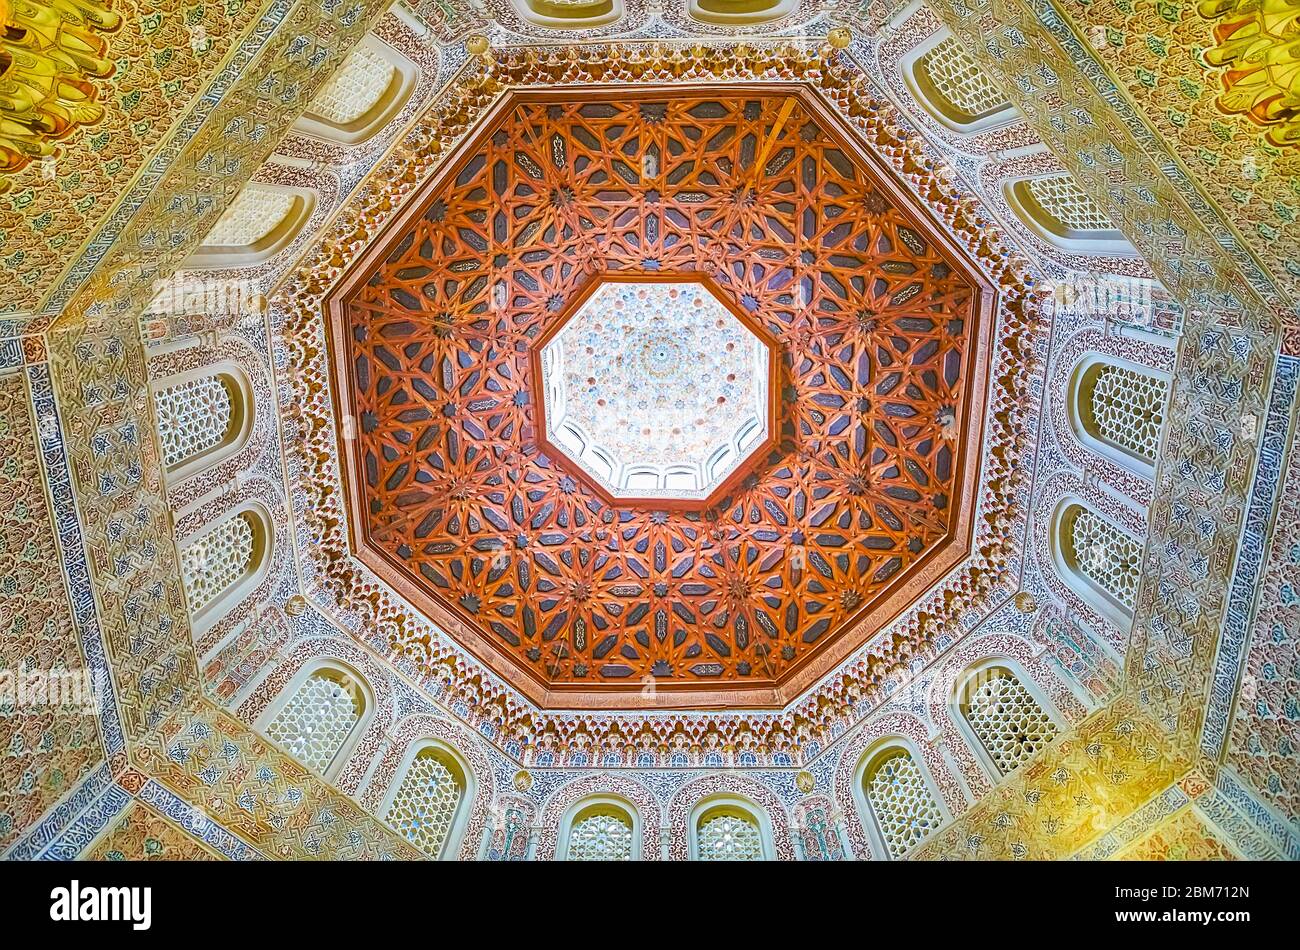 GRANADA, SPANIEN - 27. SEPTEMBER 2019: Prächtige Kuppel in der Moschee des Palacio de la Madraza (Madrasa) mit Sternmuster, Arabesken, Mocarabe (muqarnas) Stockfoto